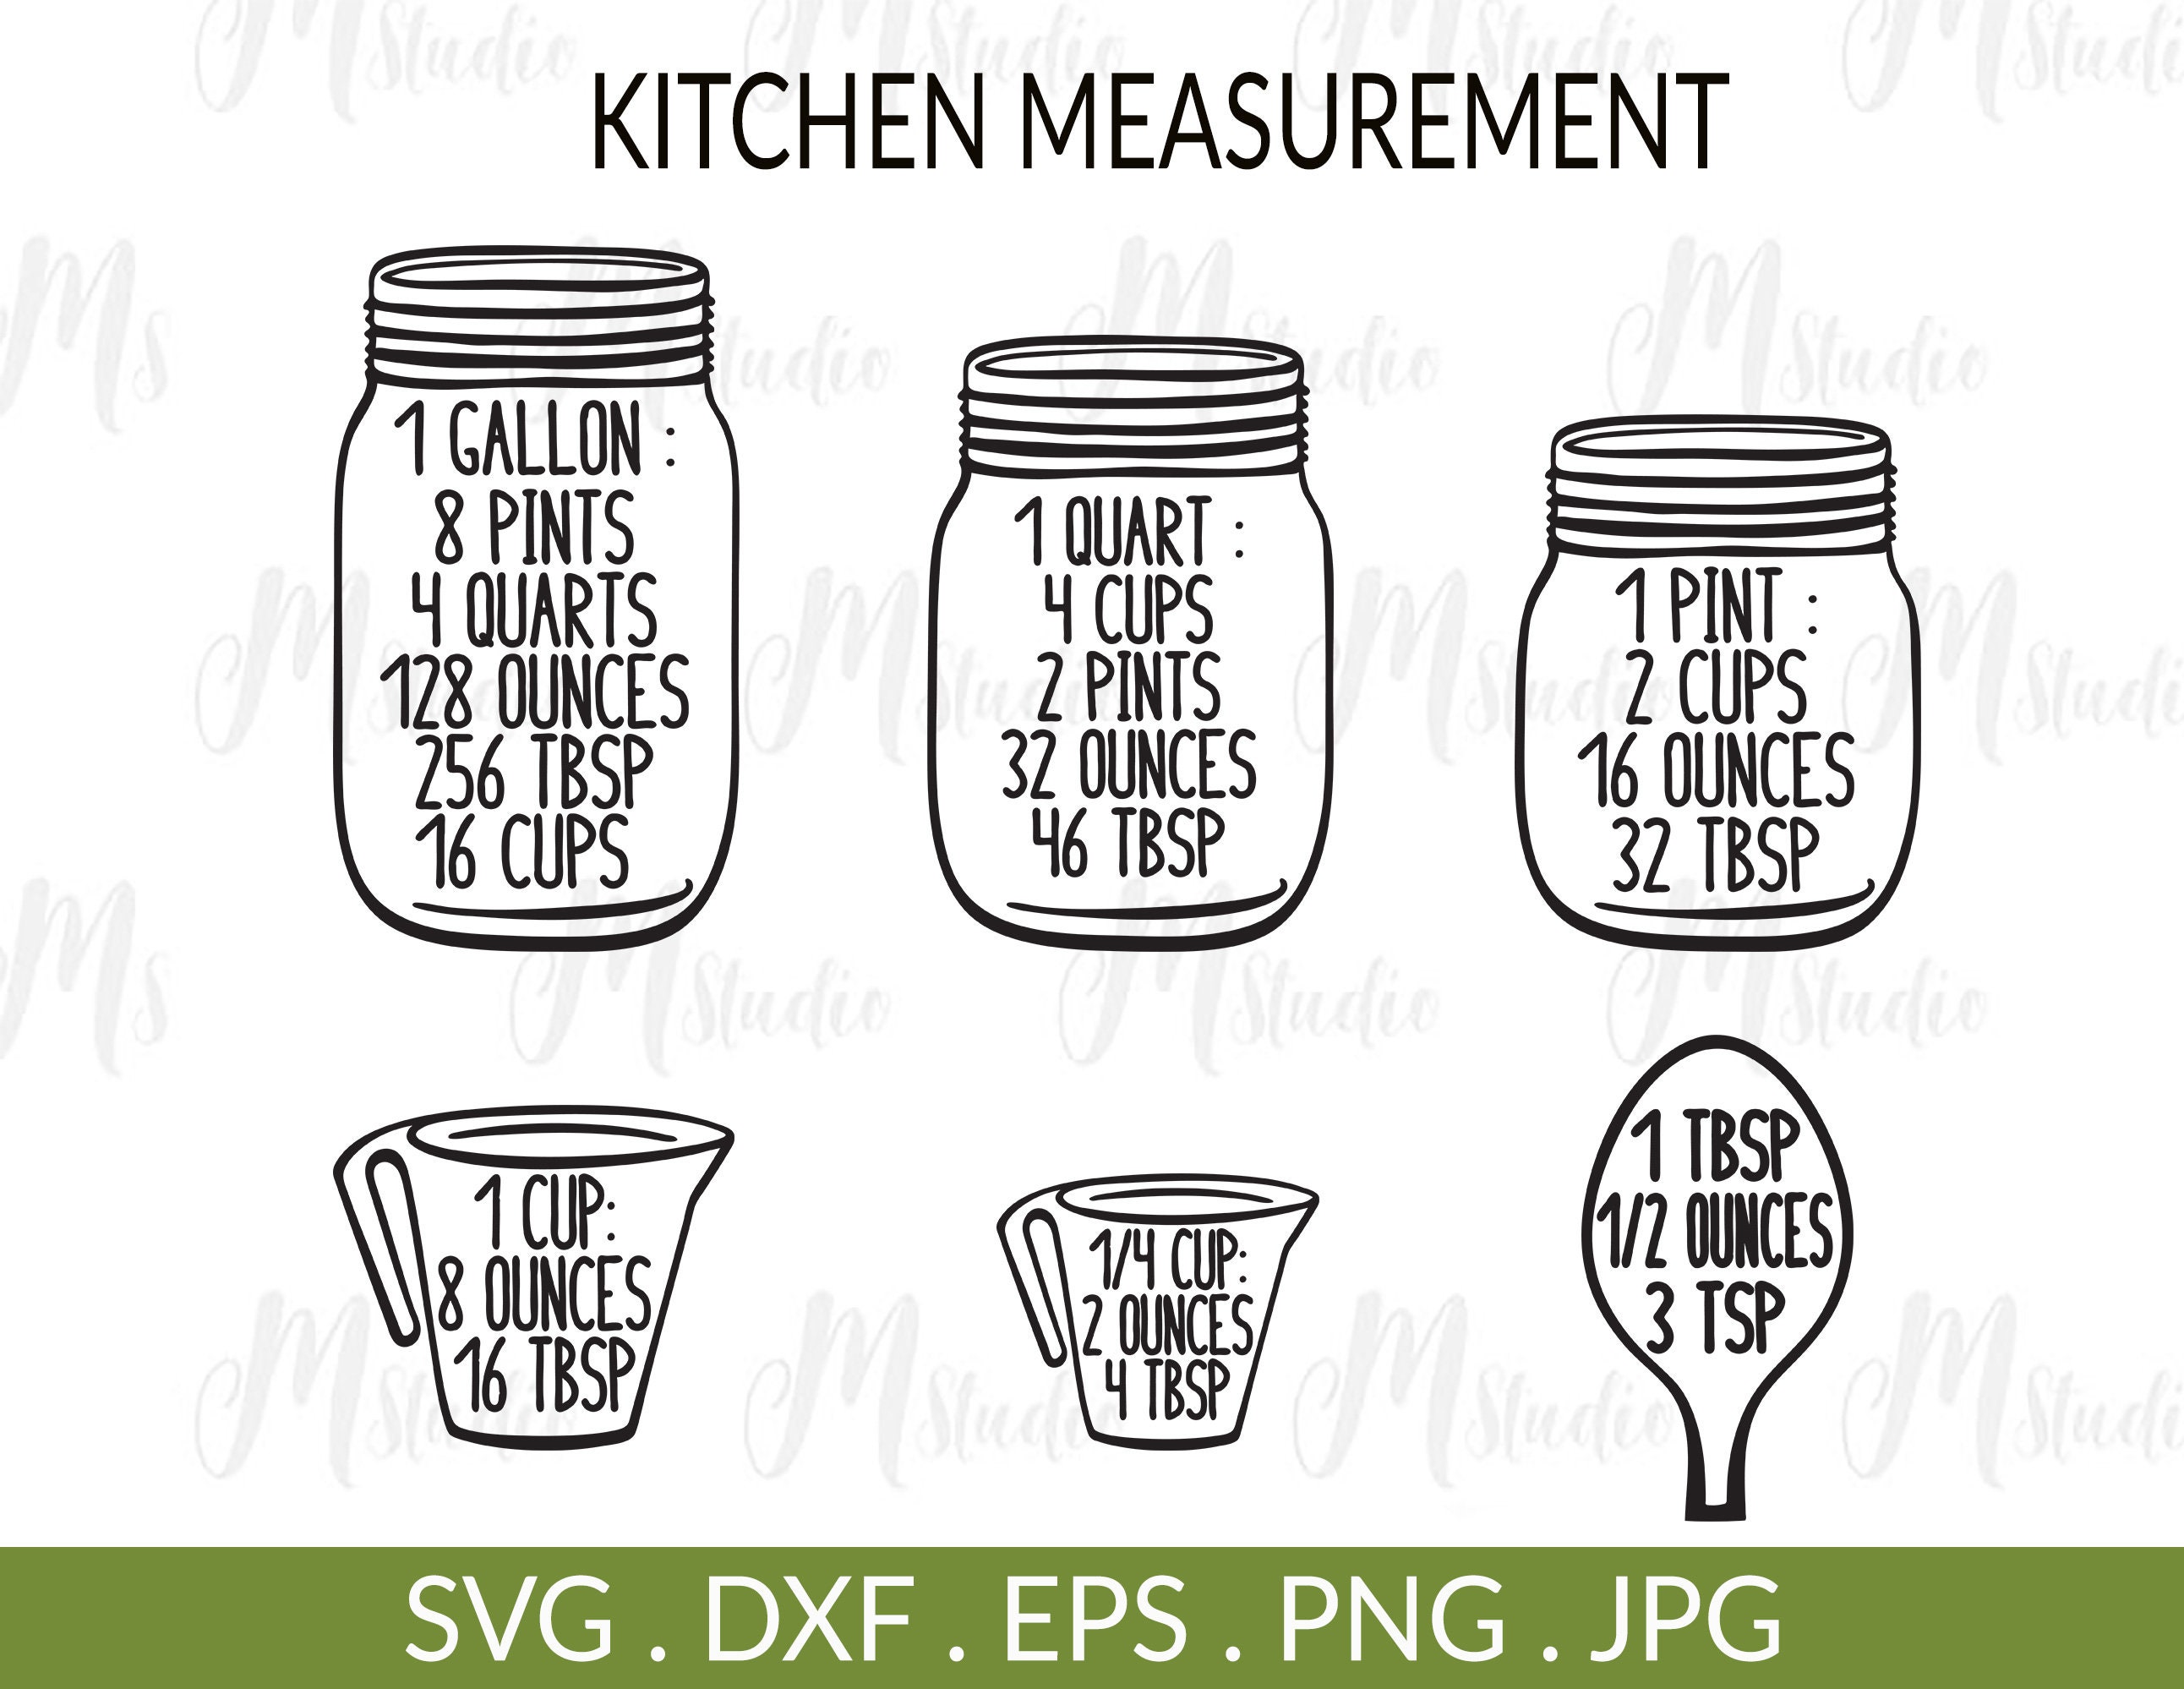 conversion-chart-cheat-sheet-kitchen-svg-measurements-1143370-cut-vrogue